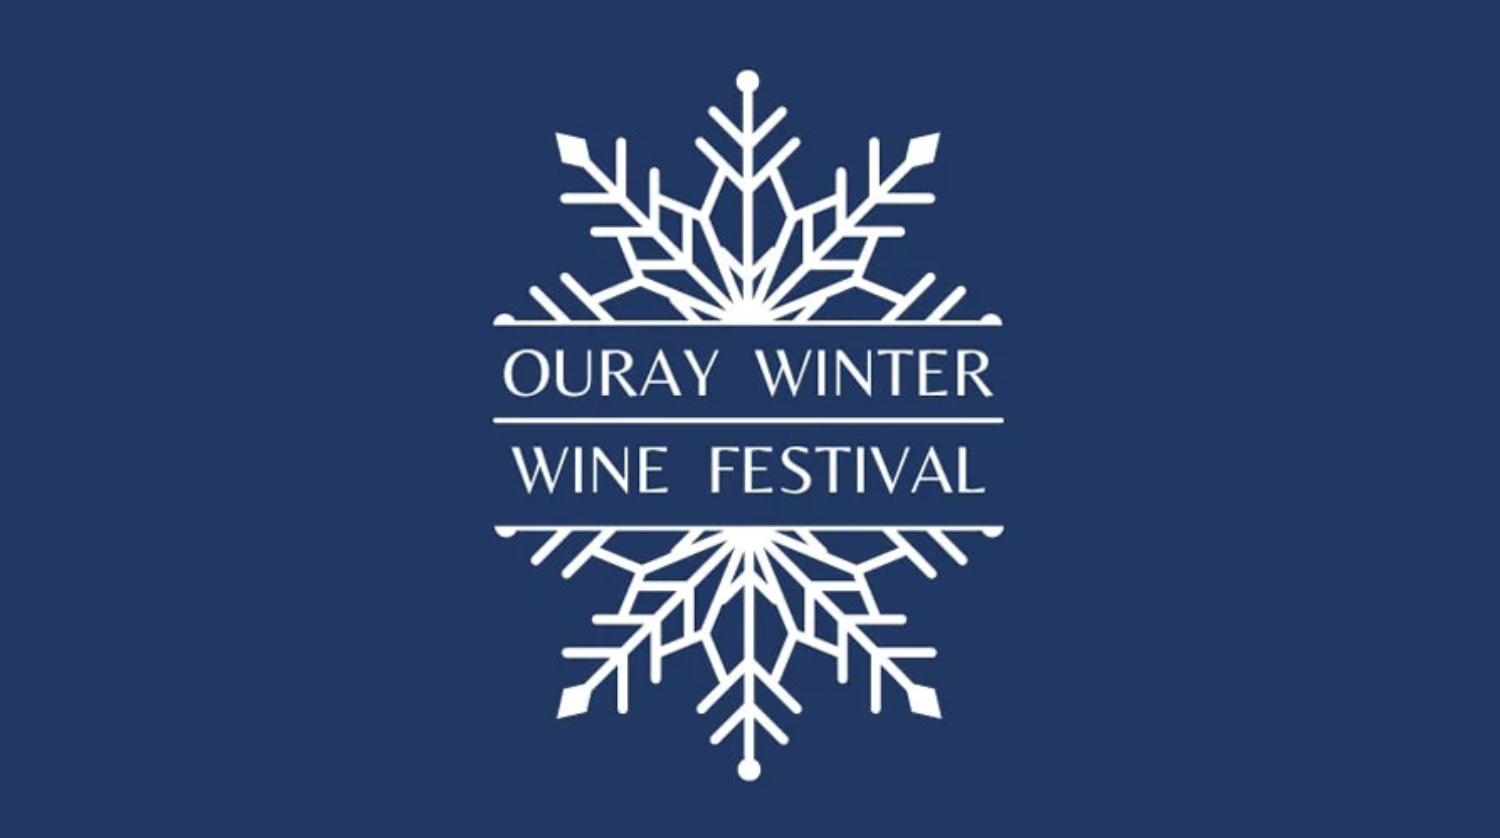 冰柱中间写着“Ouray 冬天 酒 Festival”